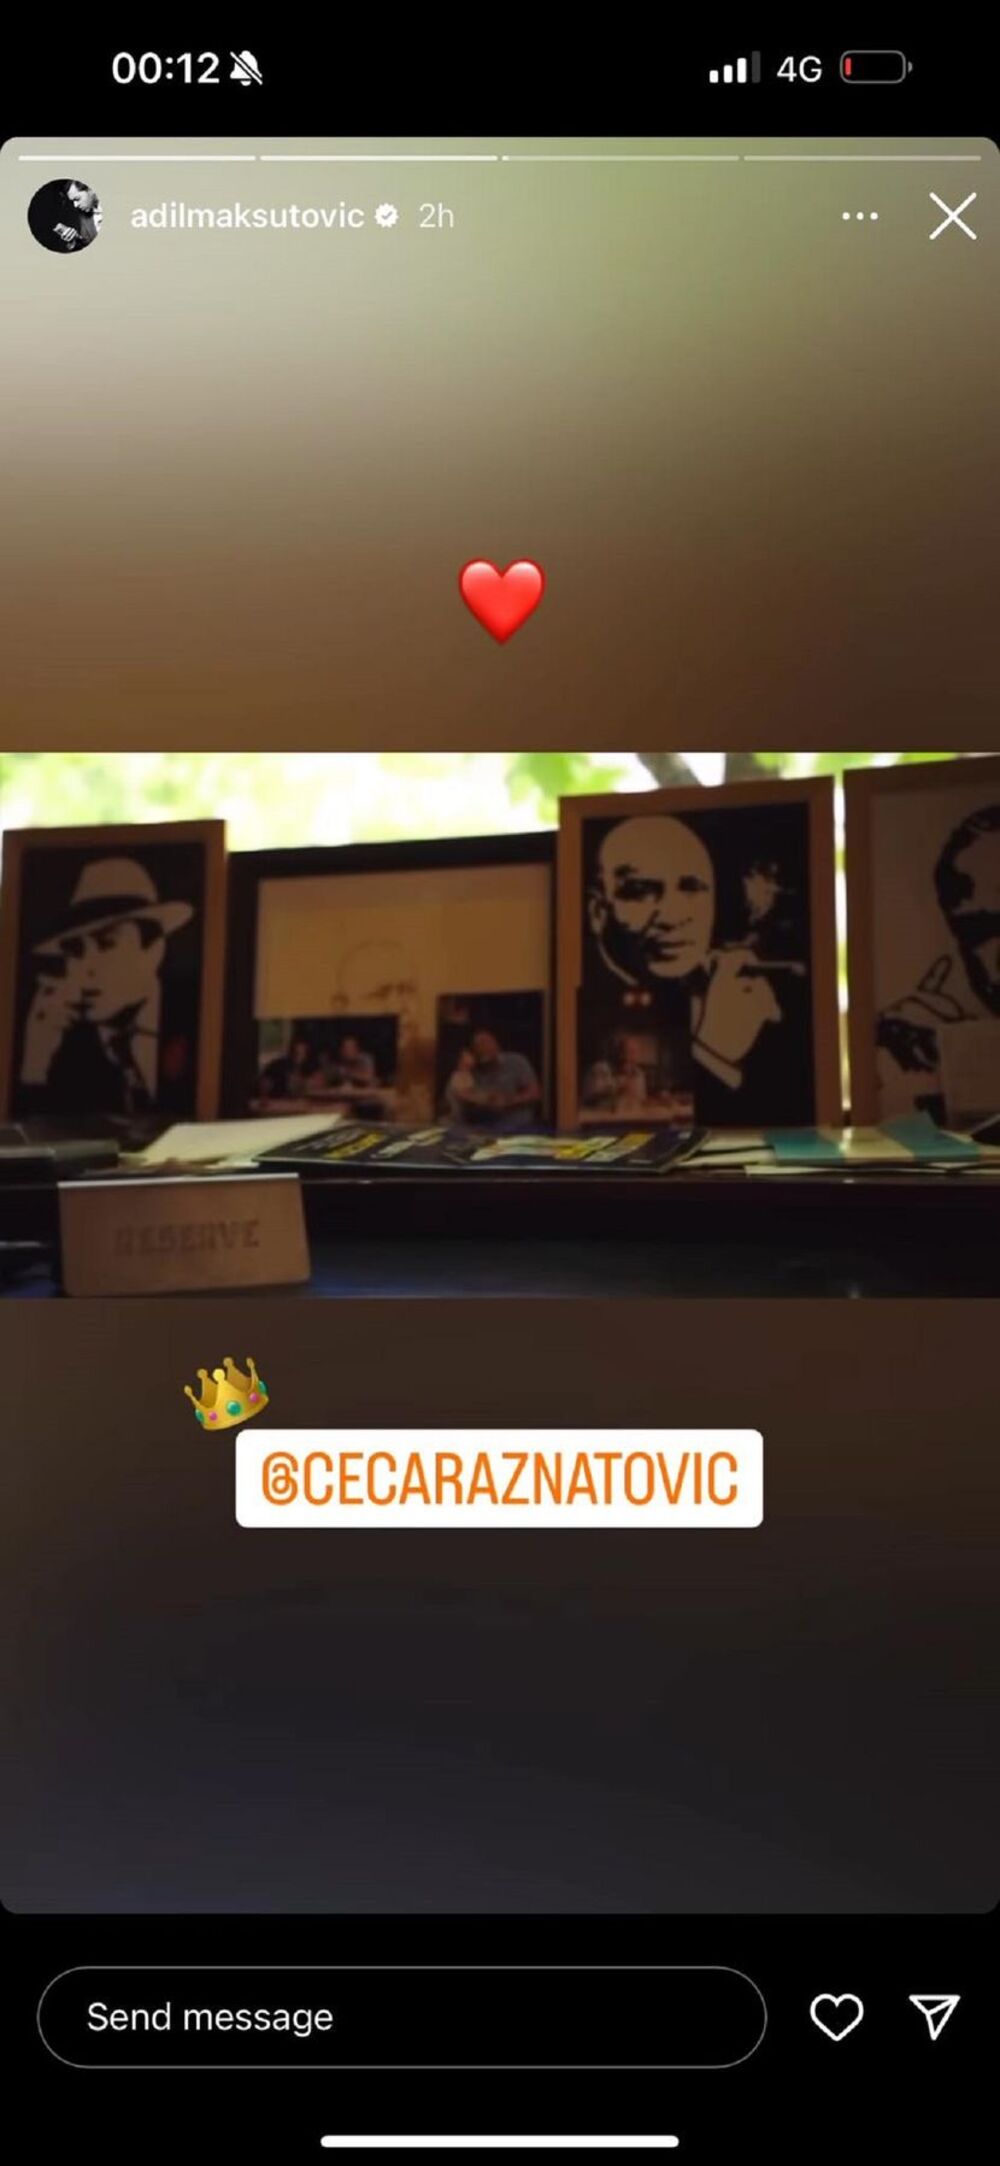 Adilovu objavu je Ražnatovićka podelila i na svom Instagramu.